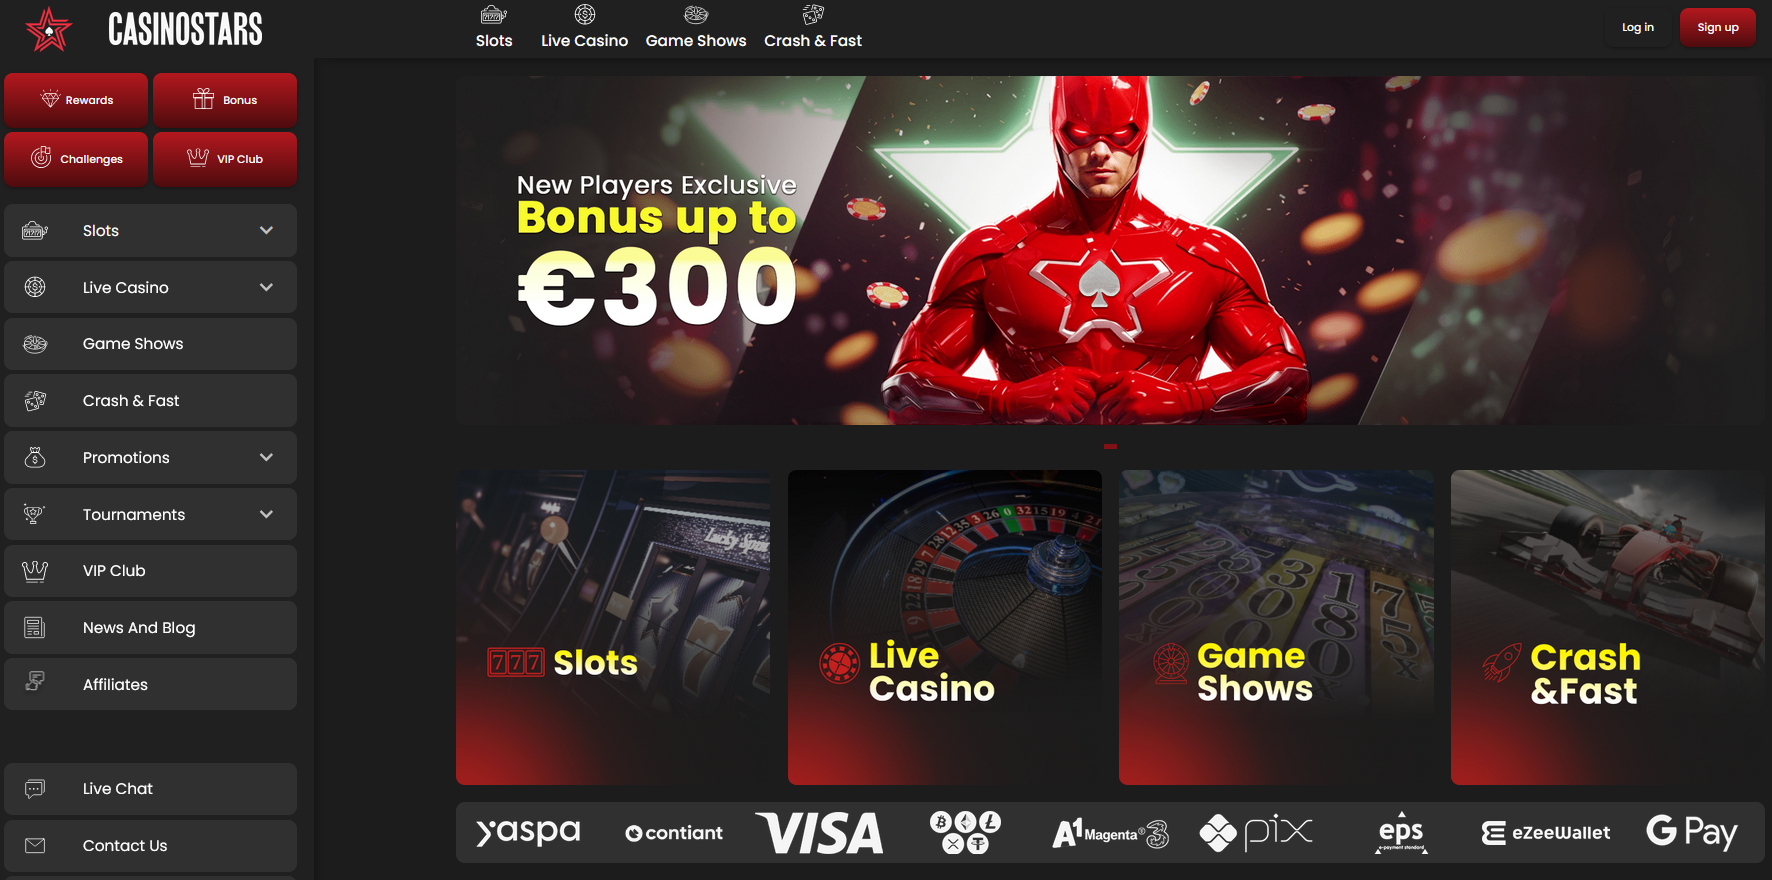 Casinostars Welcome Bonus